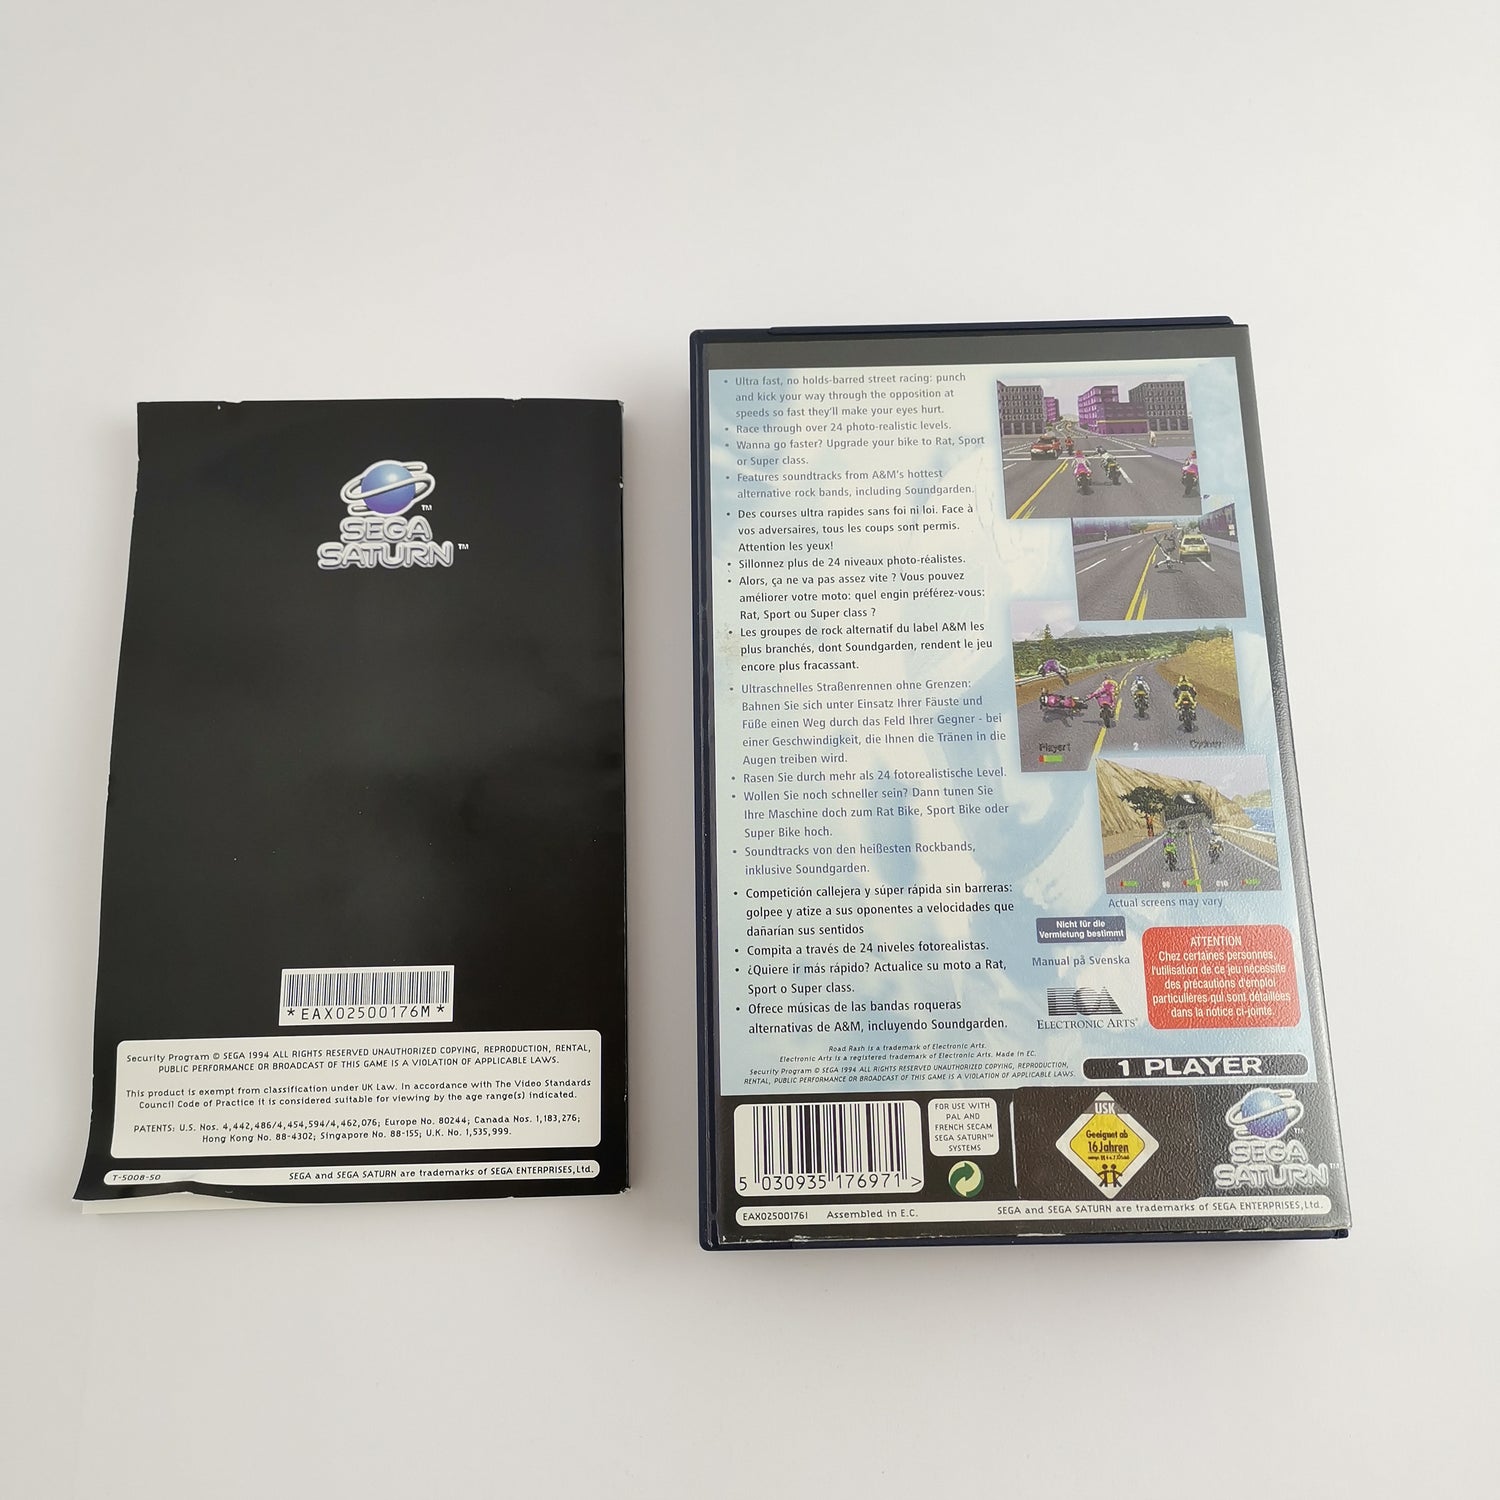 Sega Saturn Spiel : Road Rash von Electronic Arts - OVP & Anleitung | PAL Disk